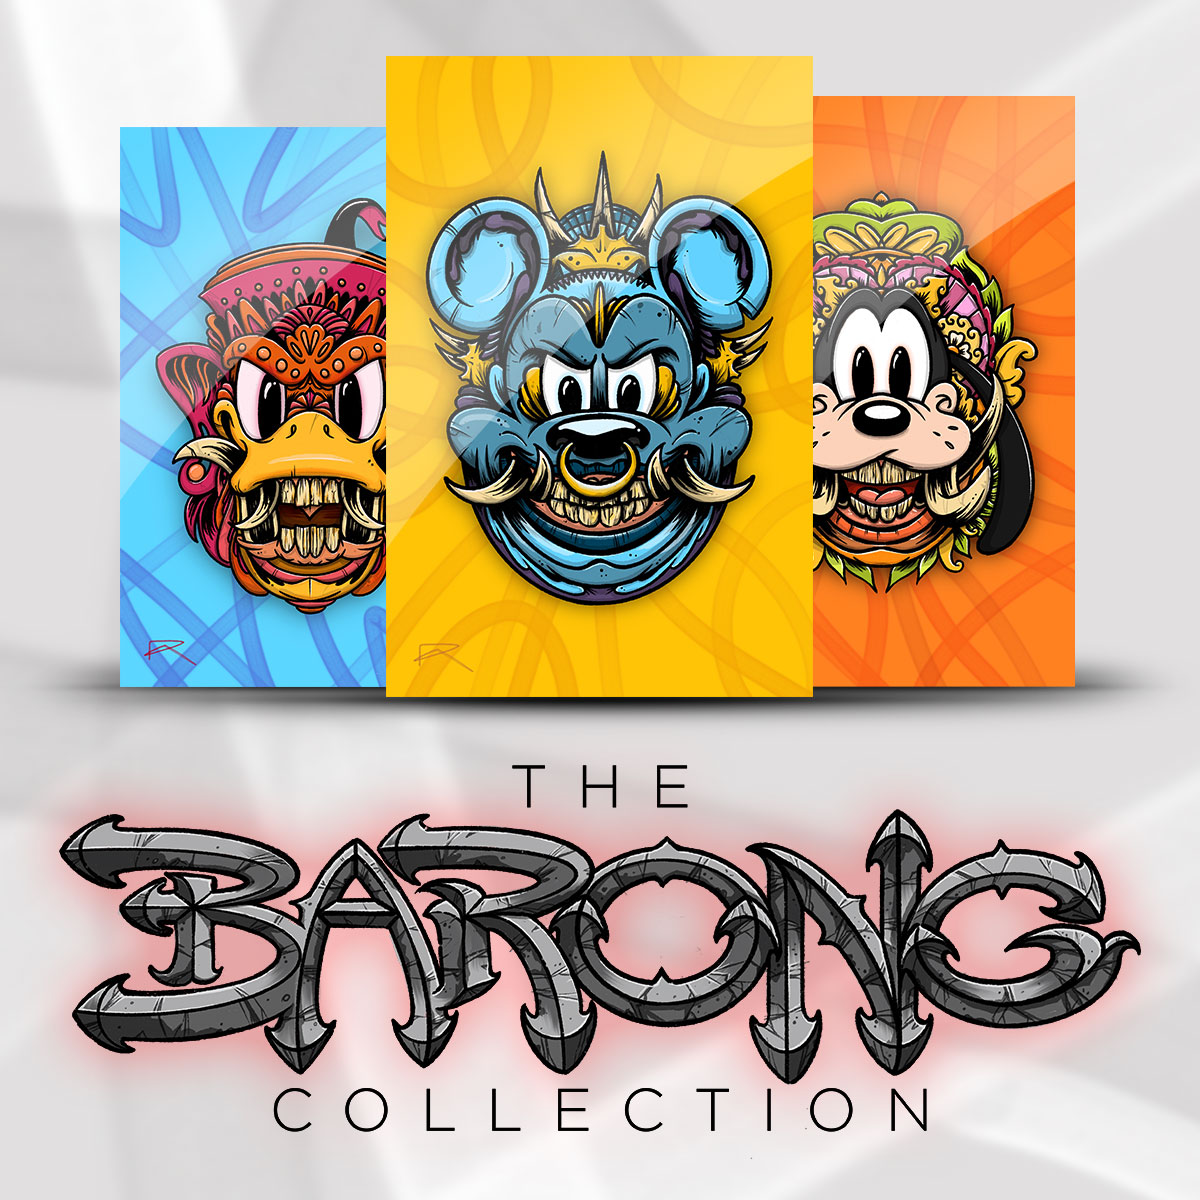 The Barong Collection